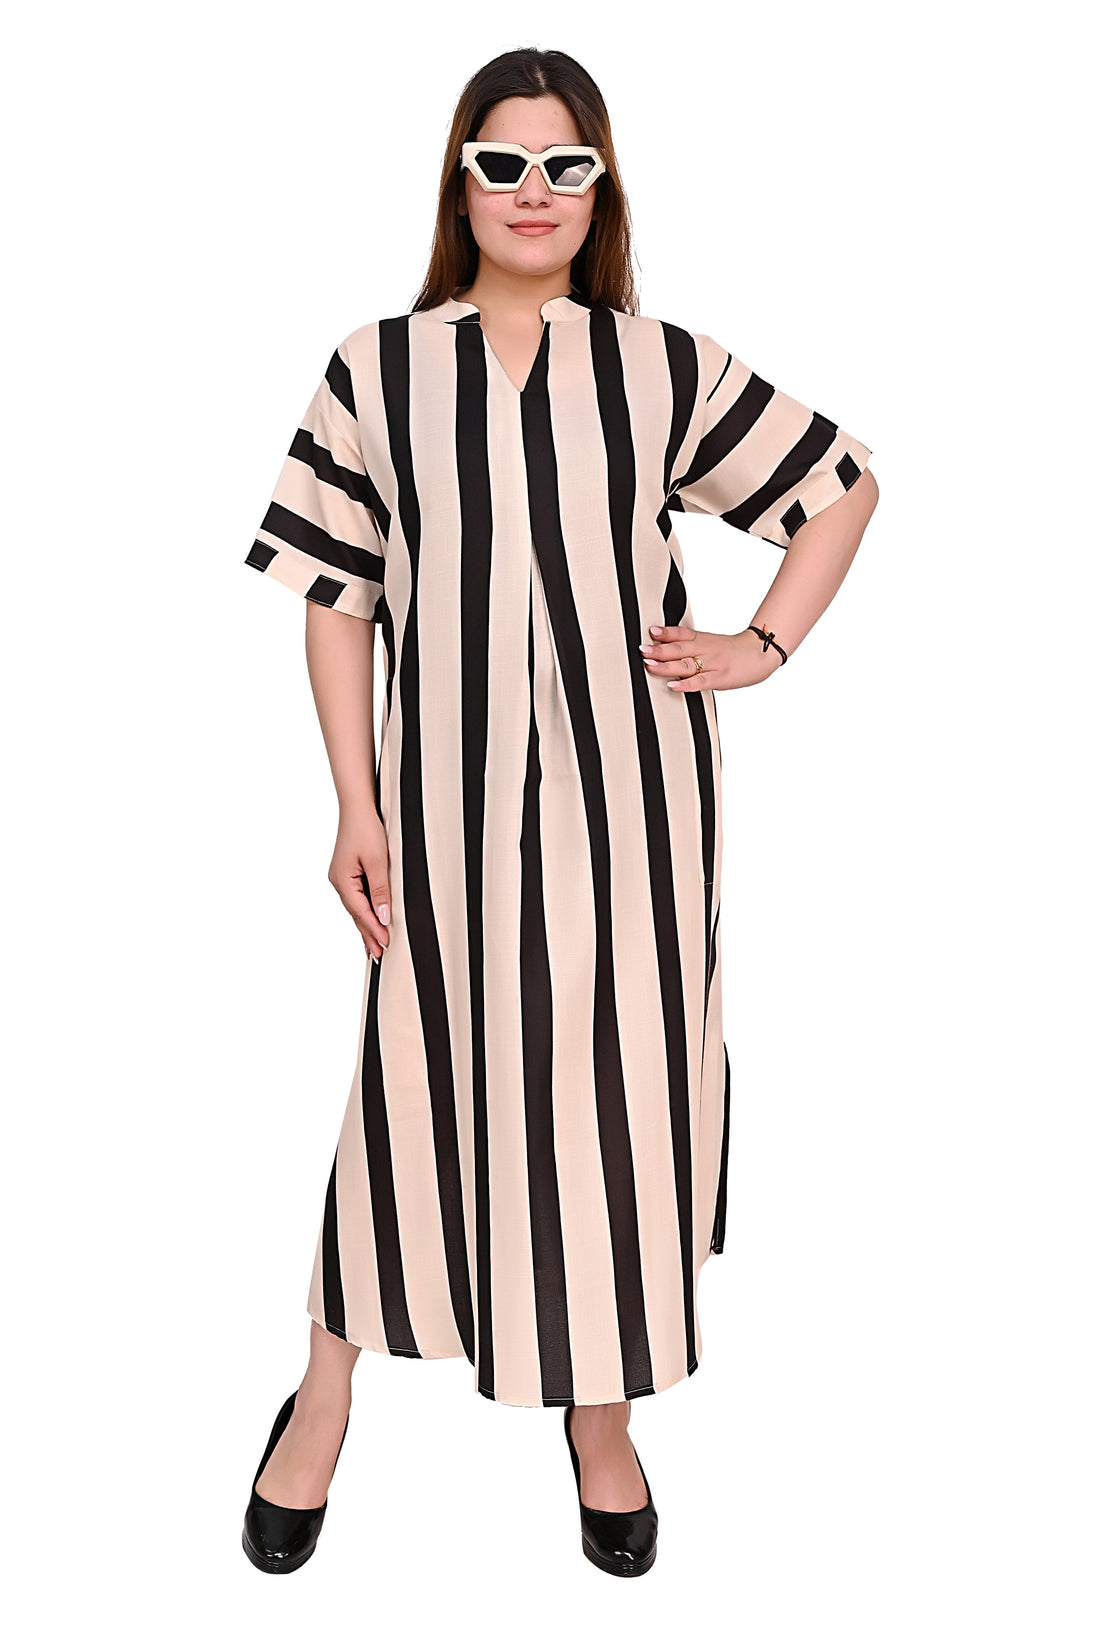 Nirmal online Premium quality digital printed stripe tunic Dress for Women in black & white stripe